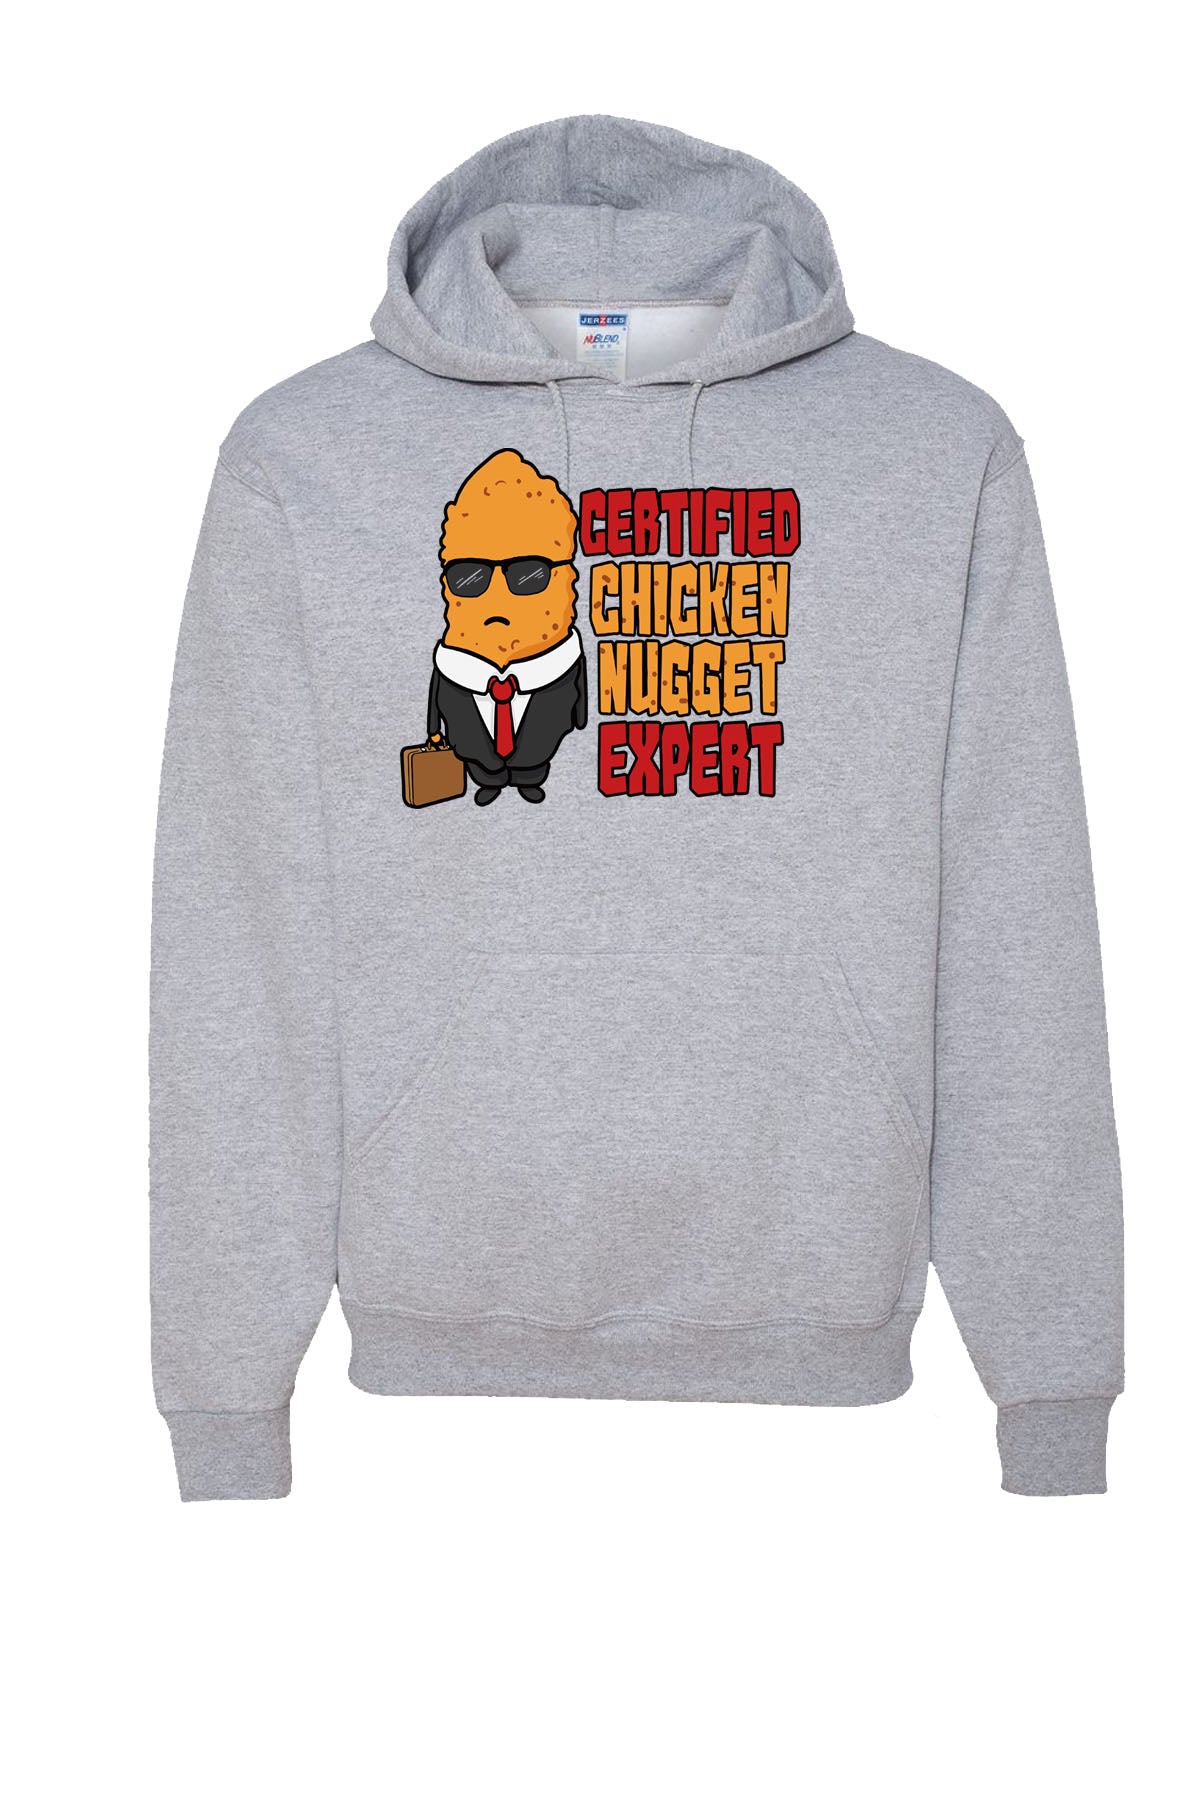 Chicken Nugget Expert Hooded Sweatshirt